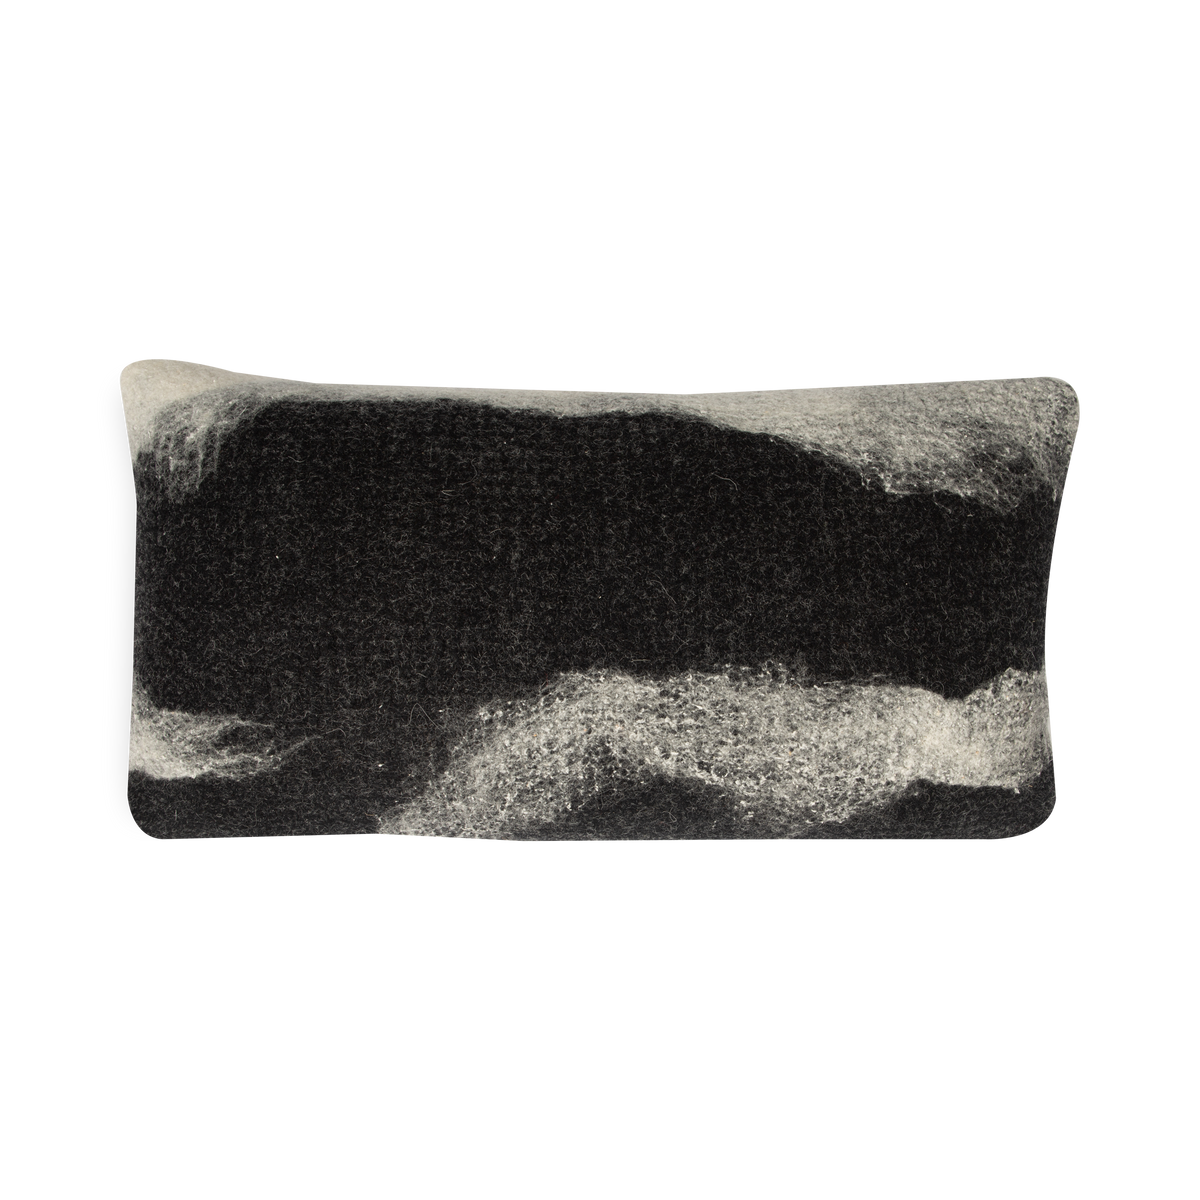 Genesis Pillow